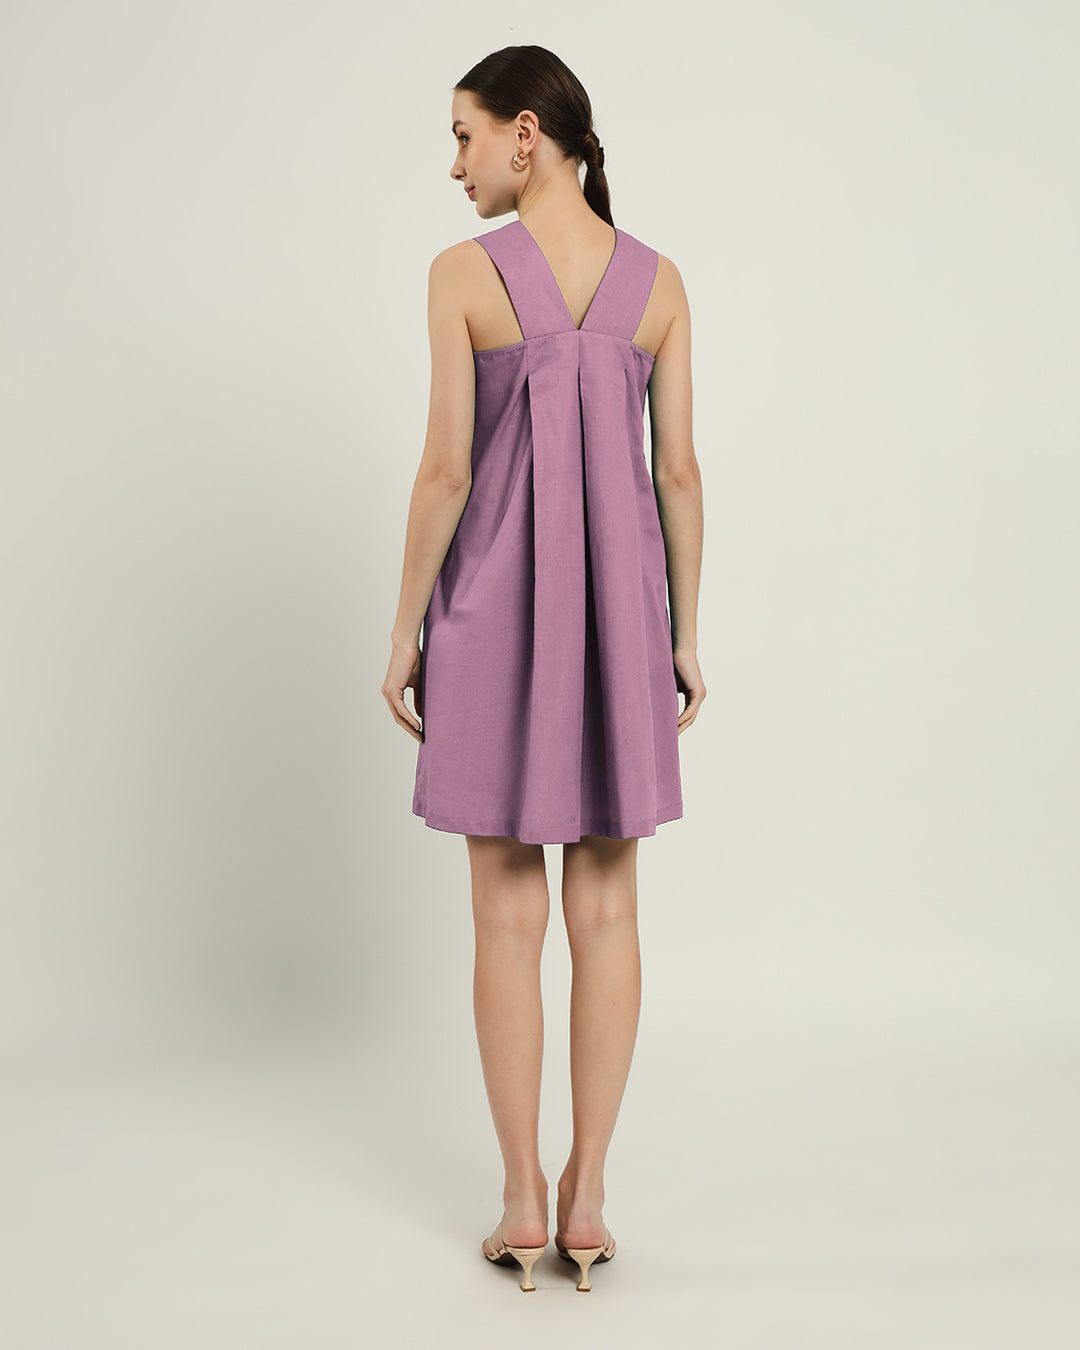 The Larissa Purple swirl Dress